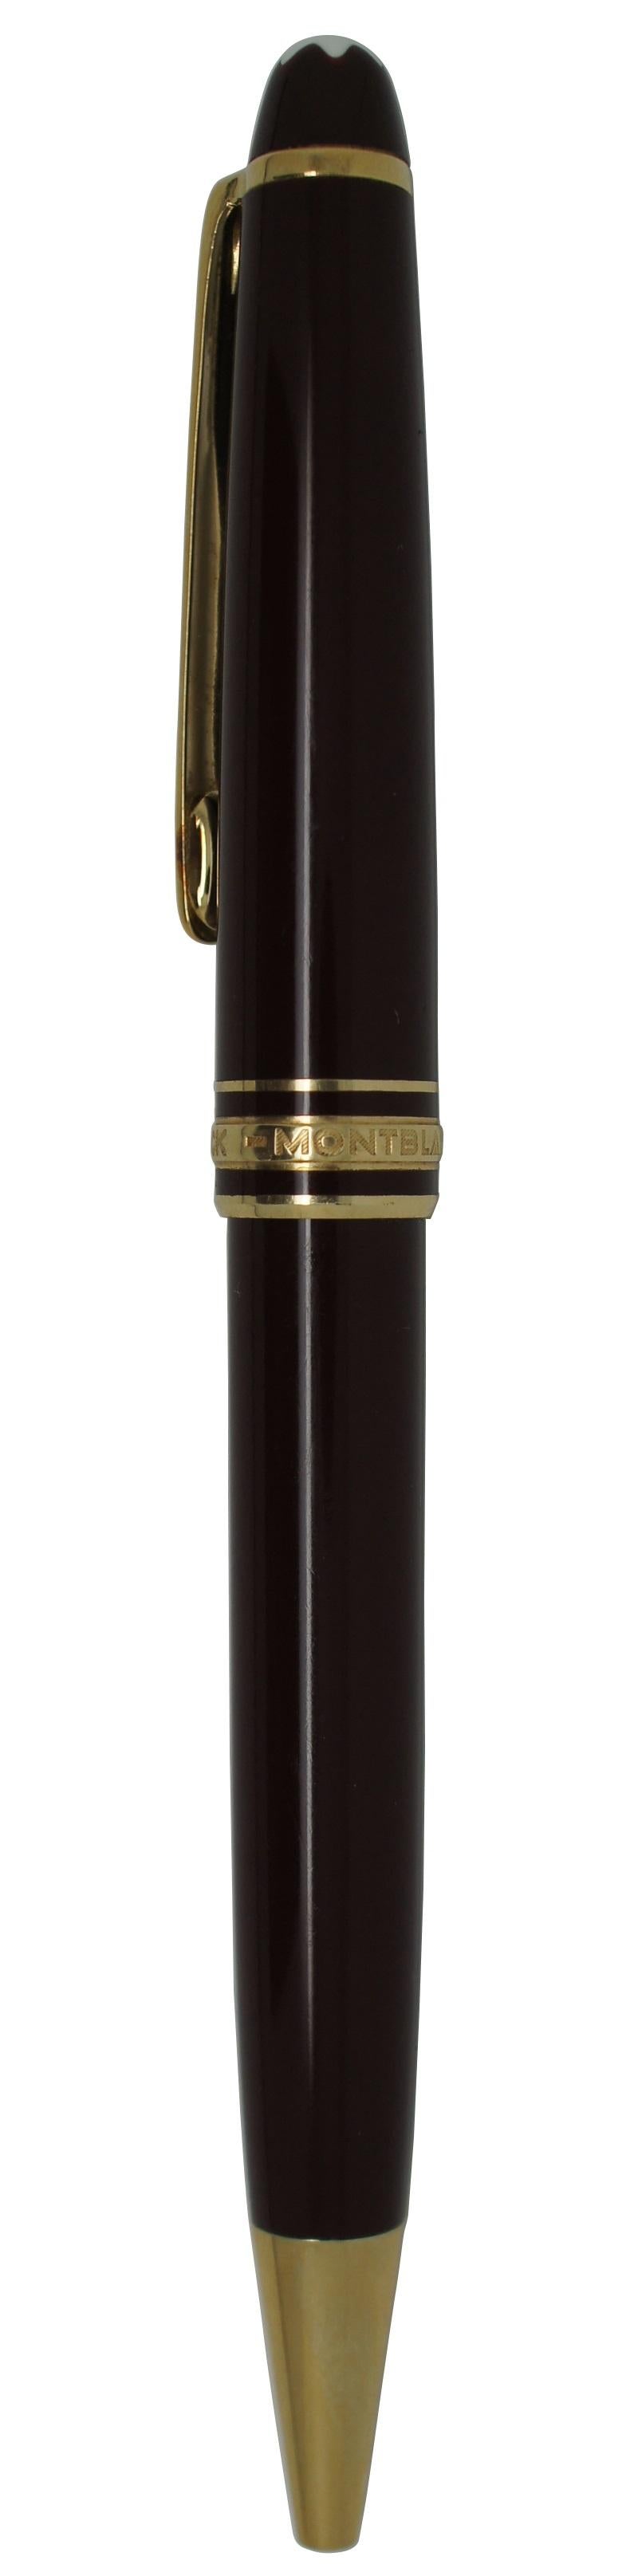 Vintage Montblanc Meisterstuck classique 164 ballpoint pen in Bordeaux red. Four ballpoint pen refills included.
     